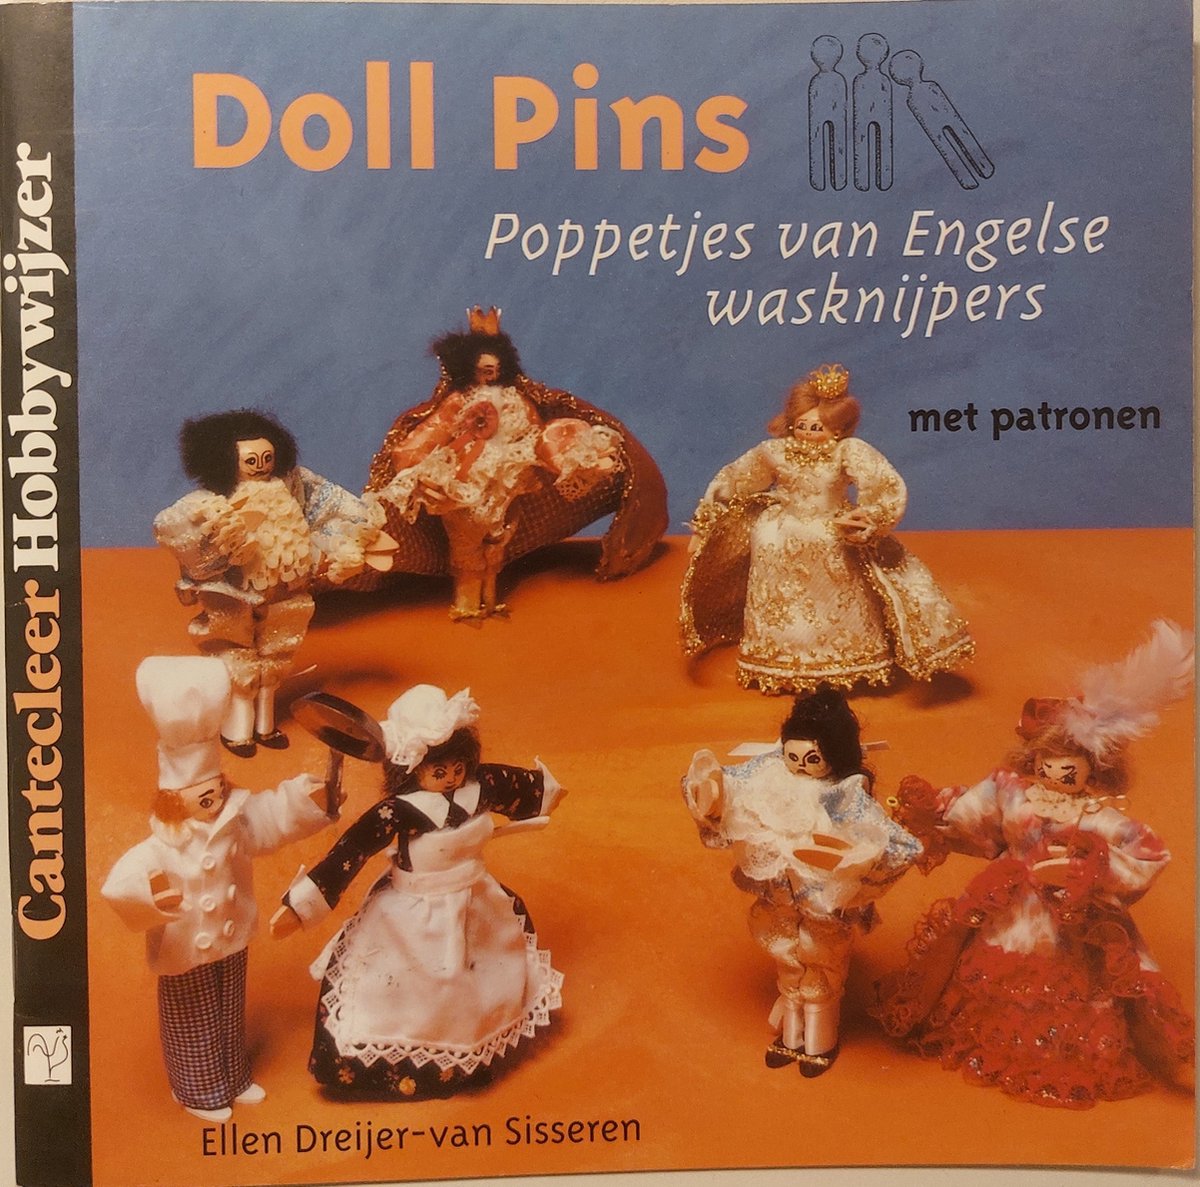 Doll pins